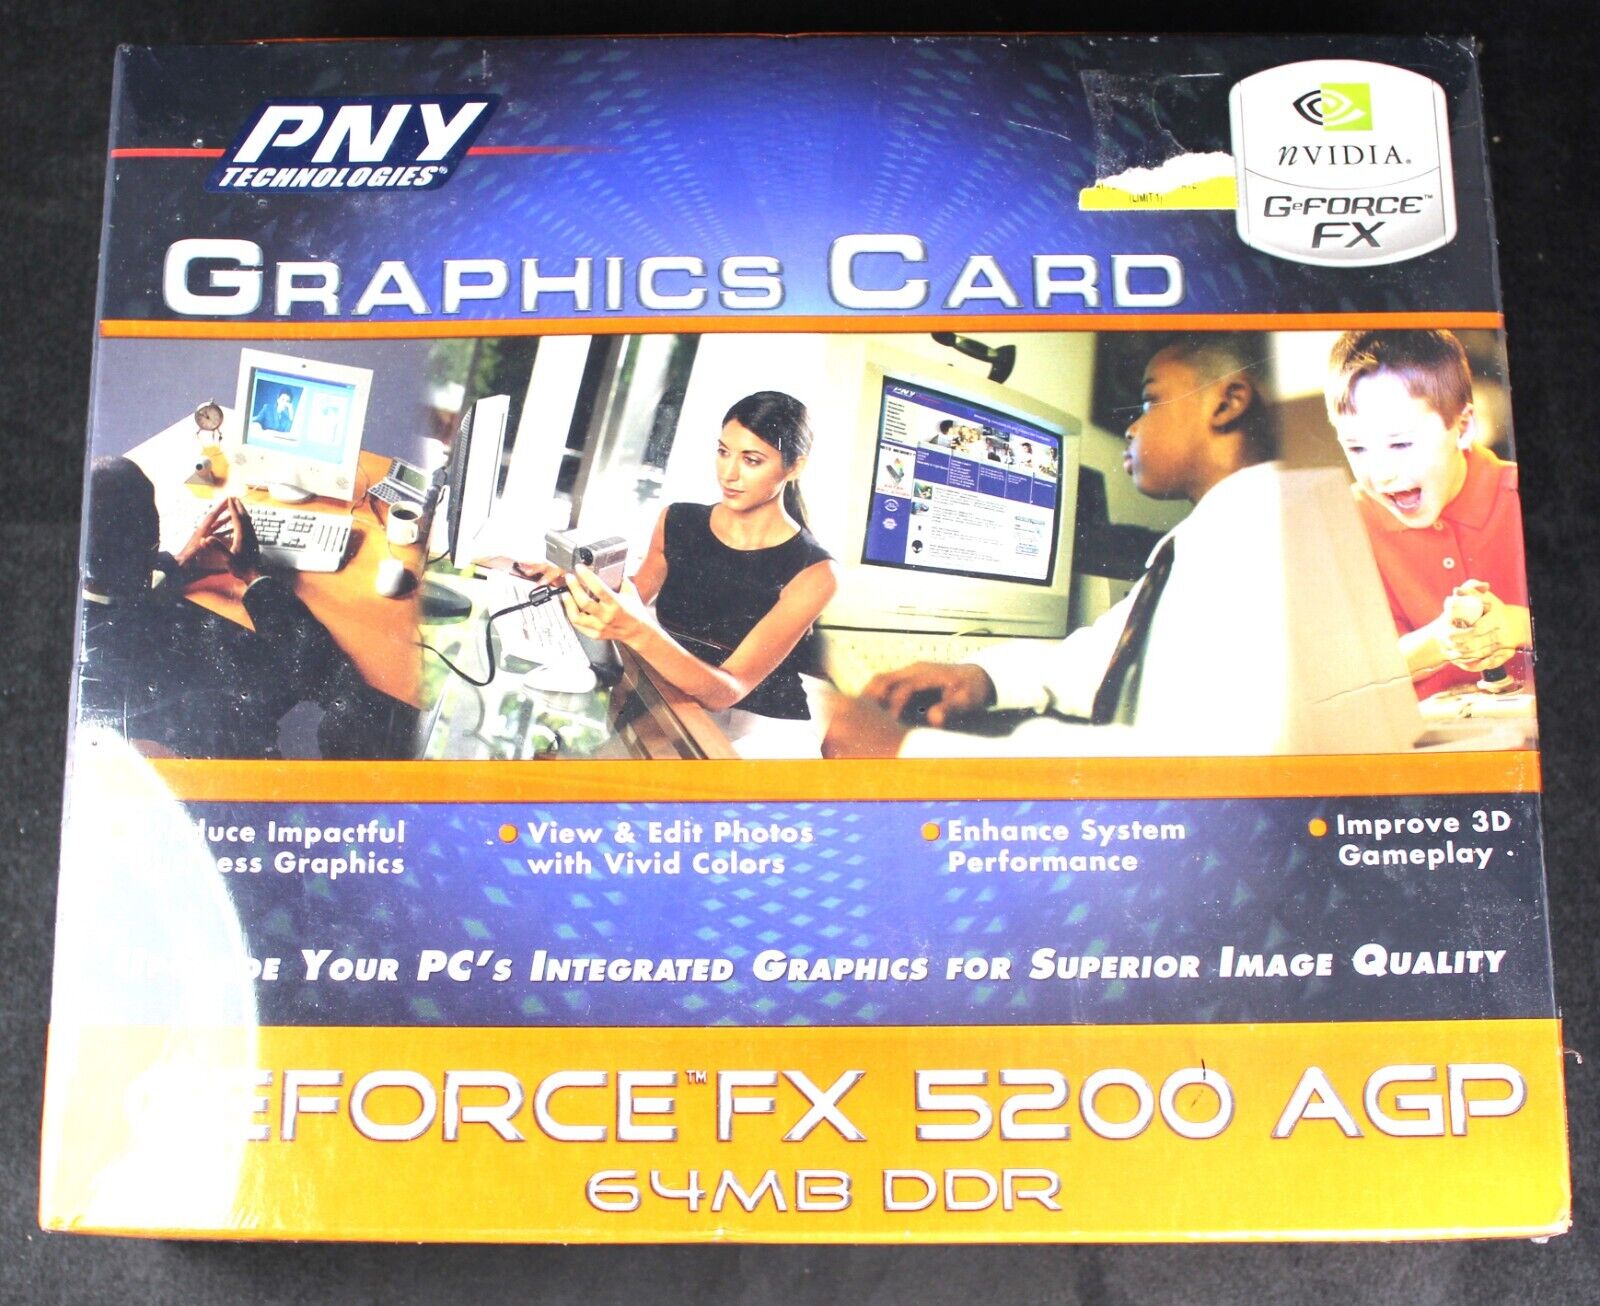 PNY Technologies GEForce FX 5200 AGP 64MB DDR Graphics Card - nVidia - NEW